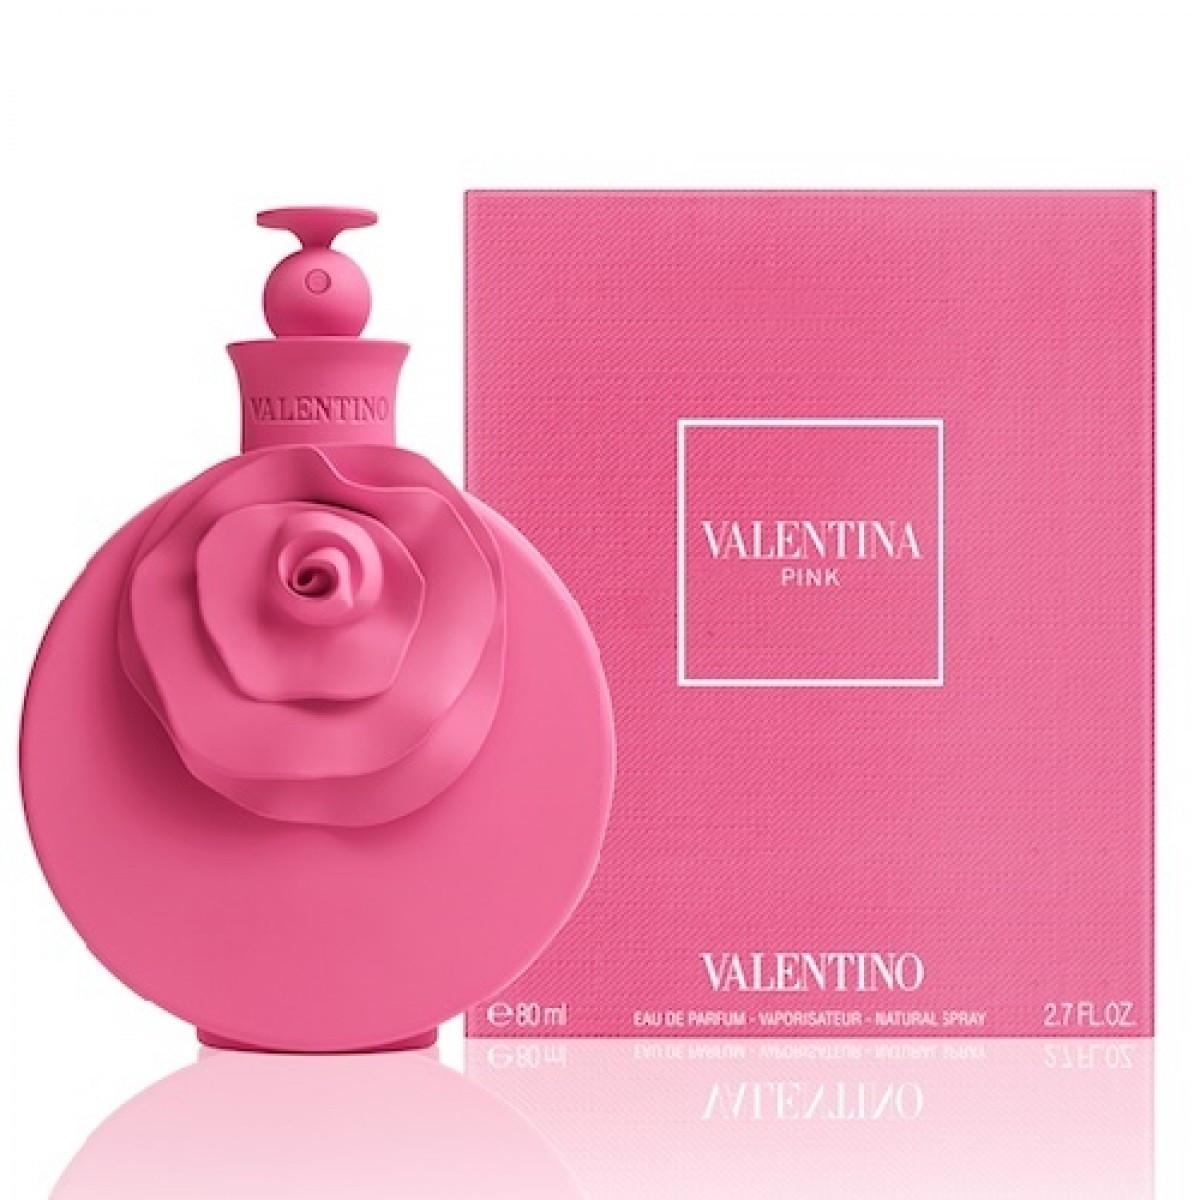 20200828_182456_Valentino Pink for wonmen 80ml2.jpg